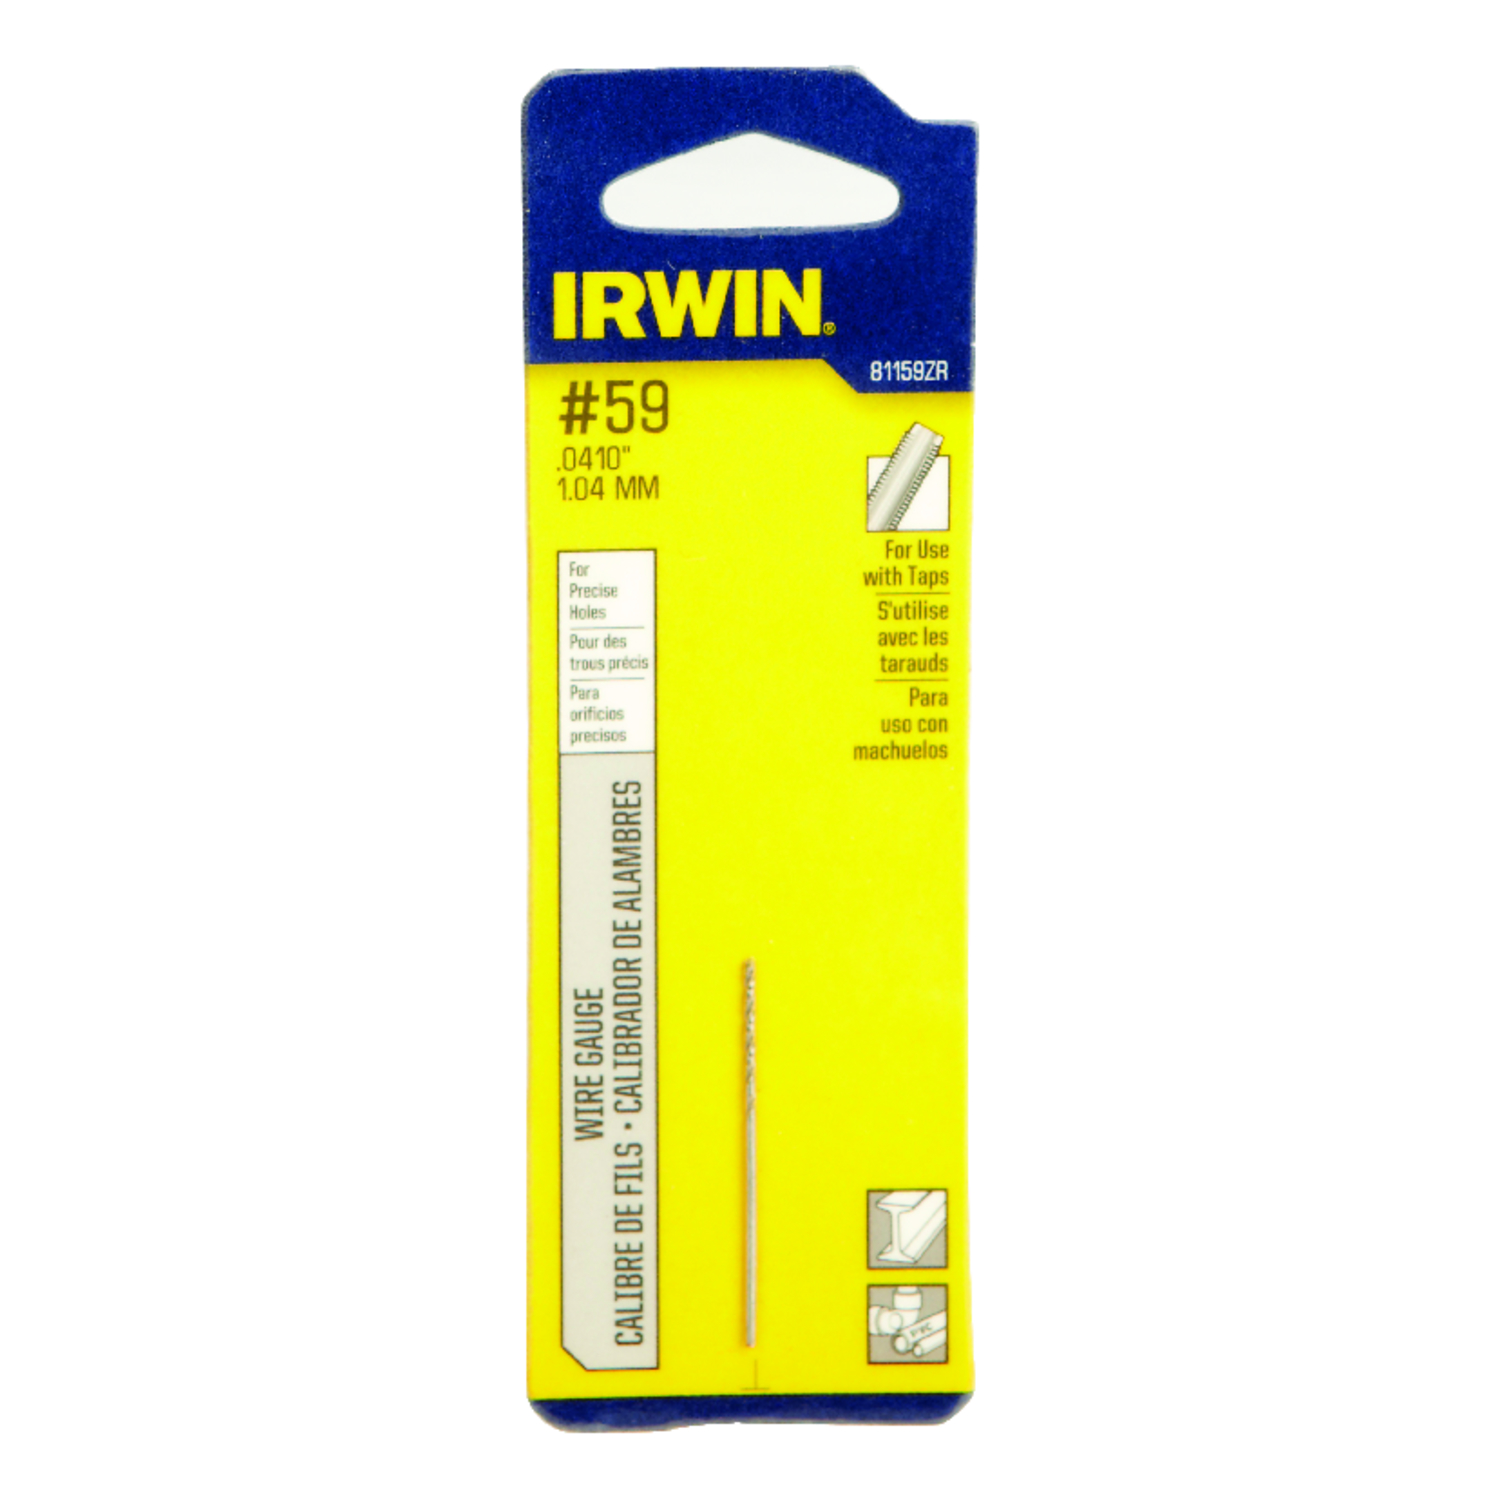 Irwin #59 X 1-5/8 in. L High Speed Steel Wire Gauge Bit 1 pc